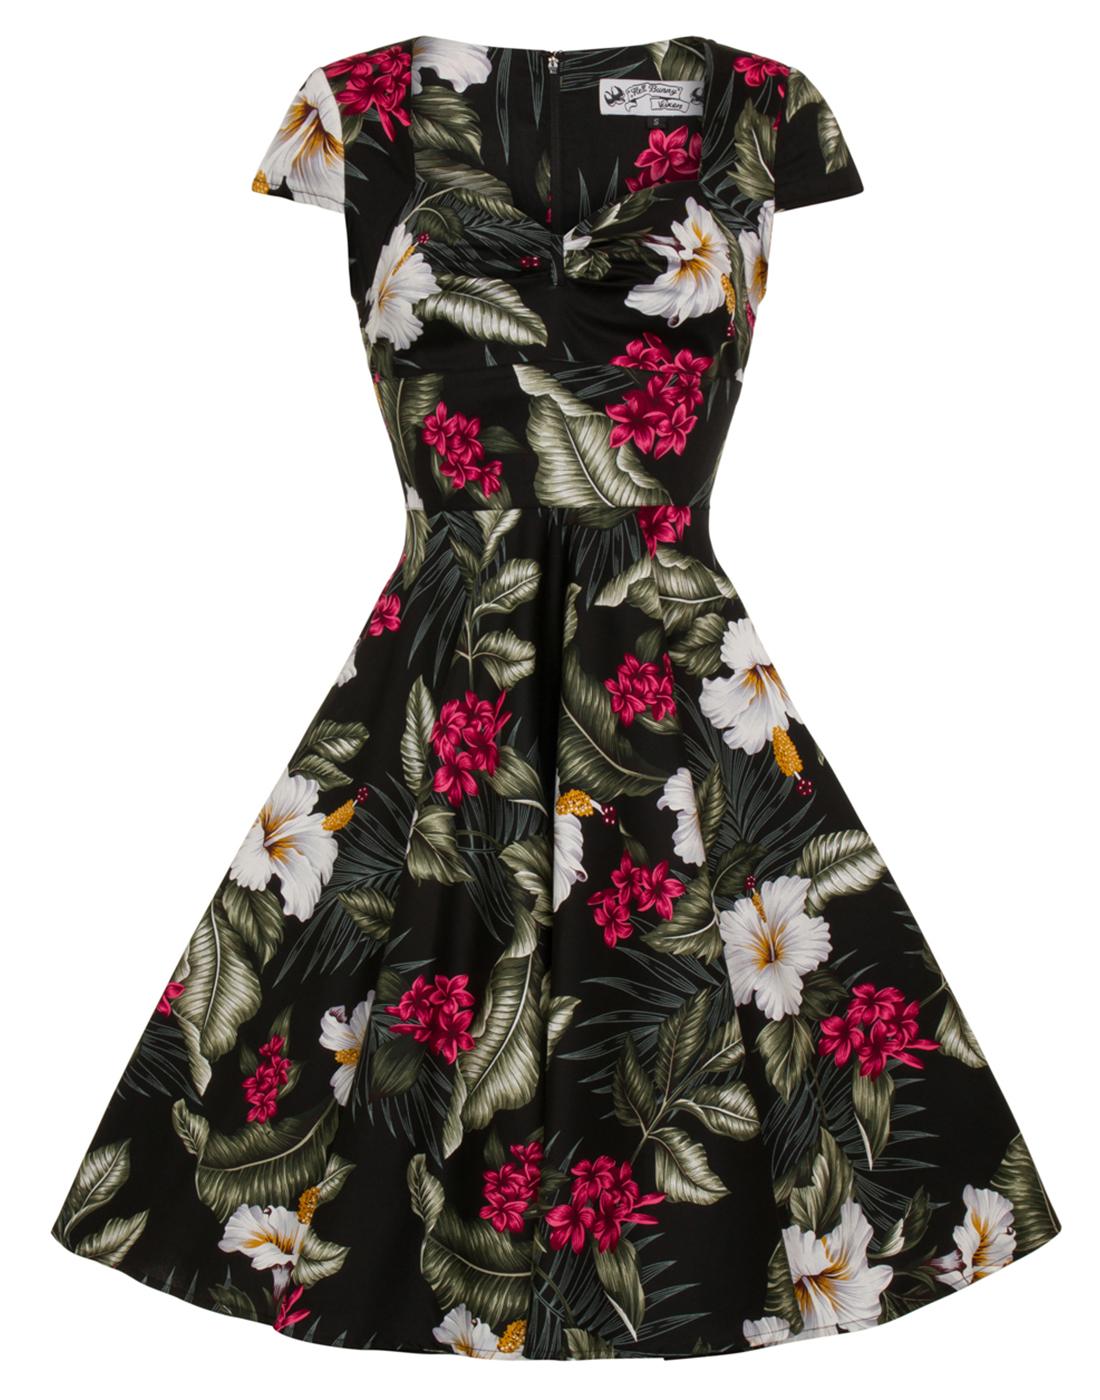 Kalei HELL BUNNY Vintage Floral Print 50s Dress